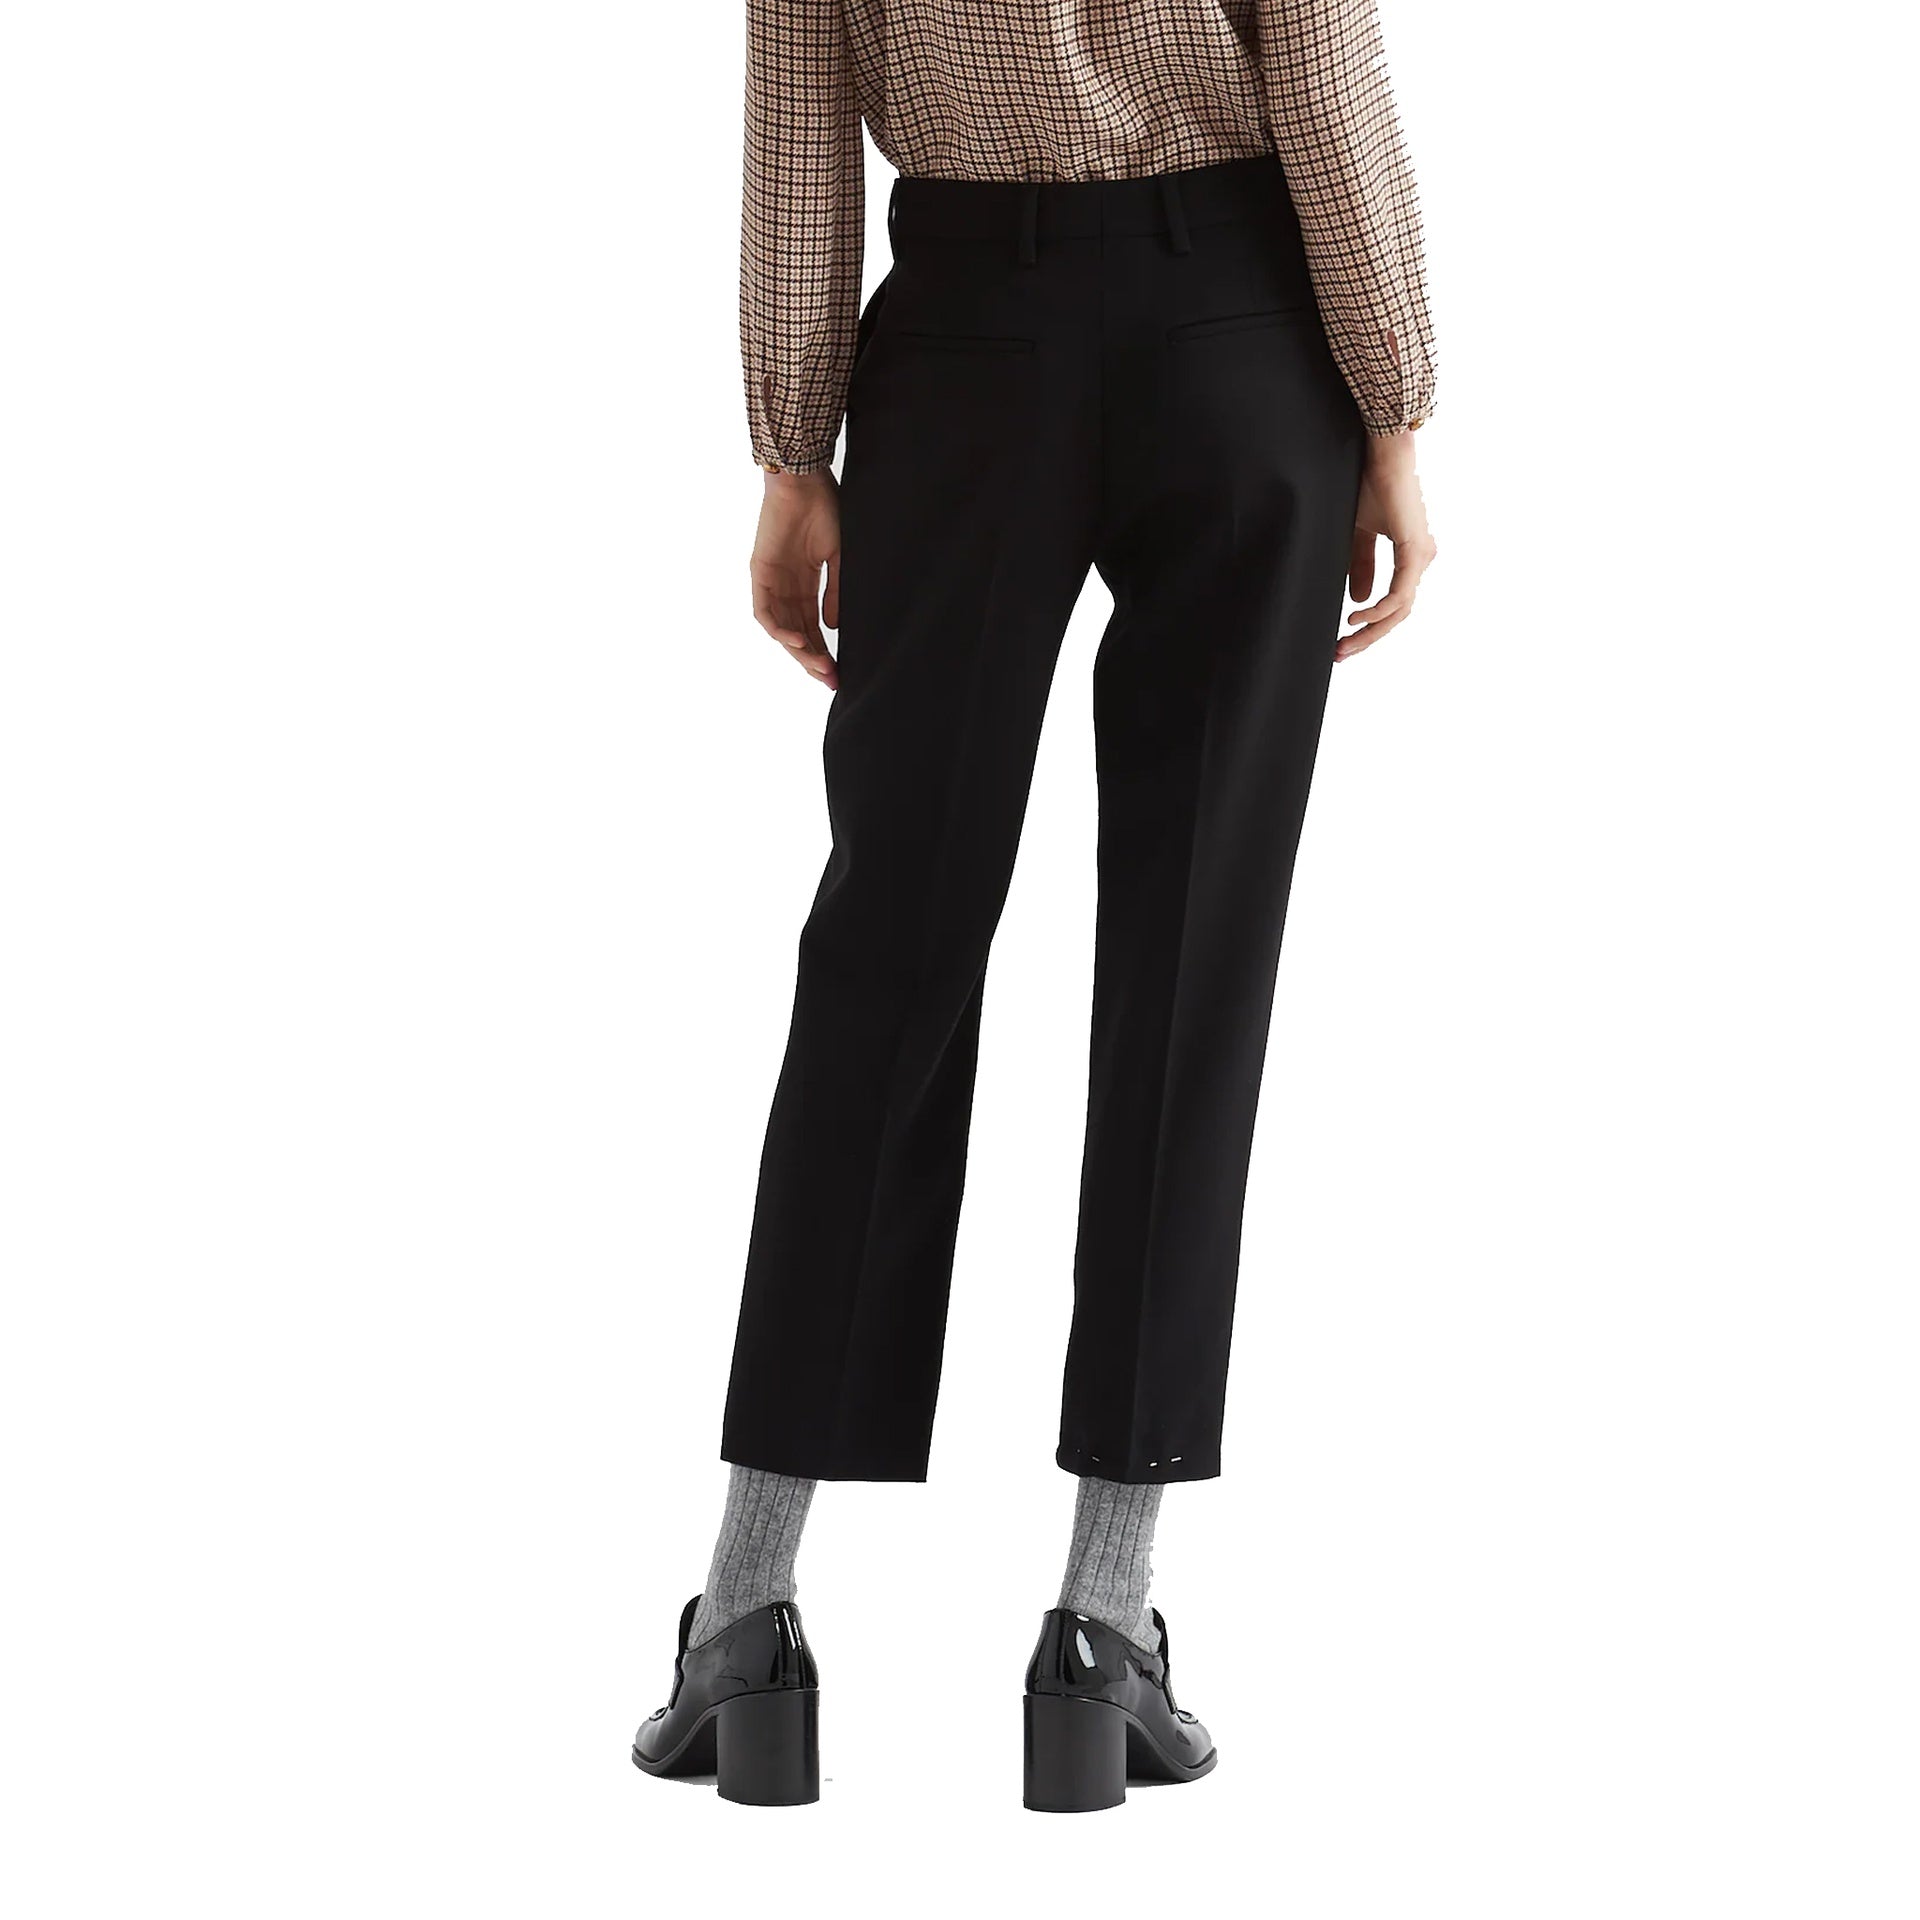 PRADA-Outlet-Sale-Prada Cropped Pants-WOMEN CLOTHING-ARCHIVIST